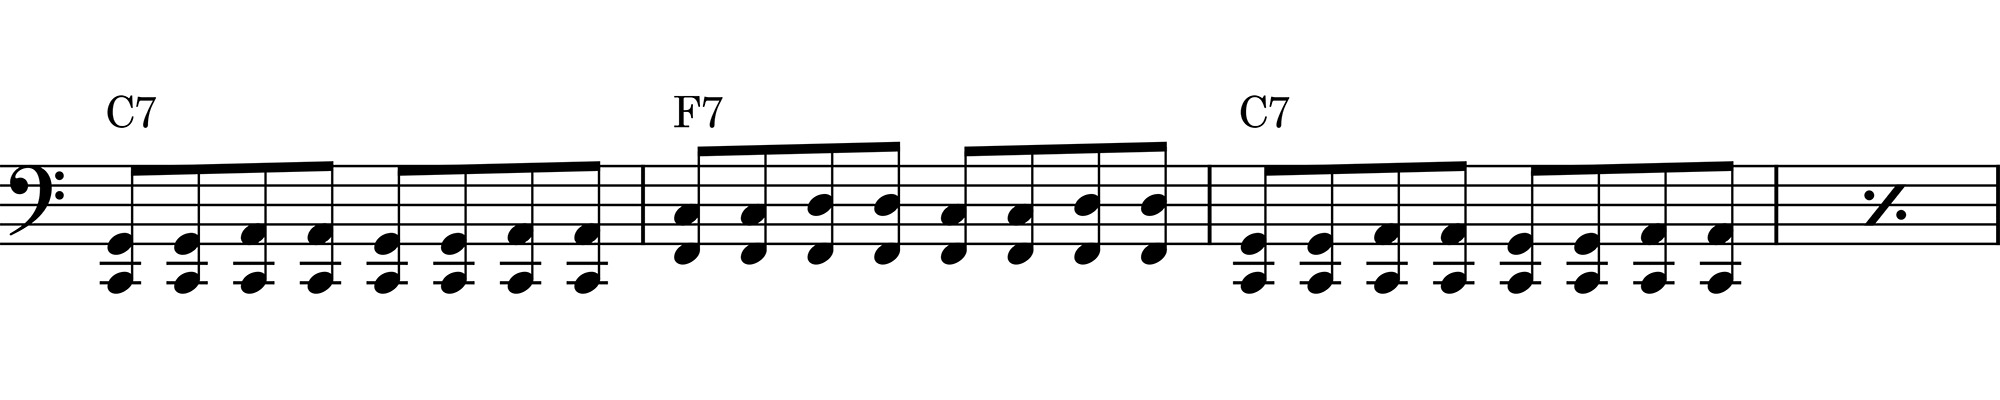 The Basic Blues Shuffle Pattern